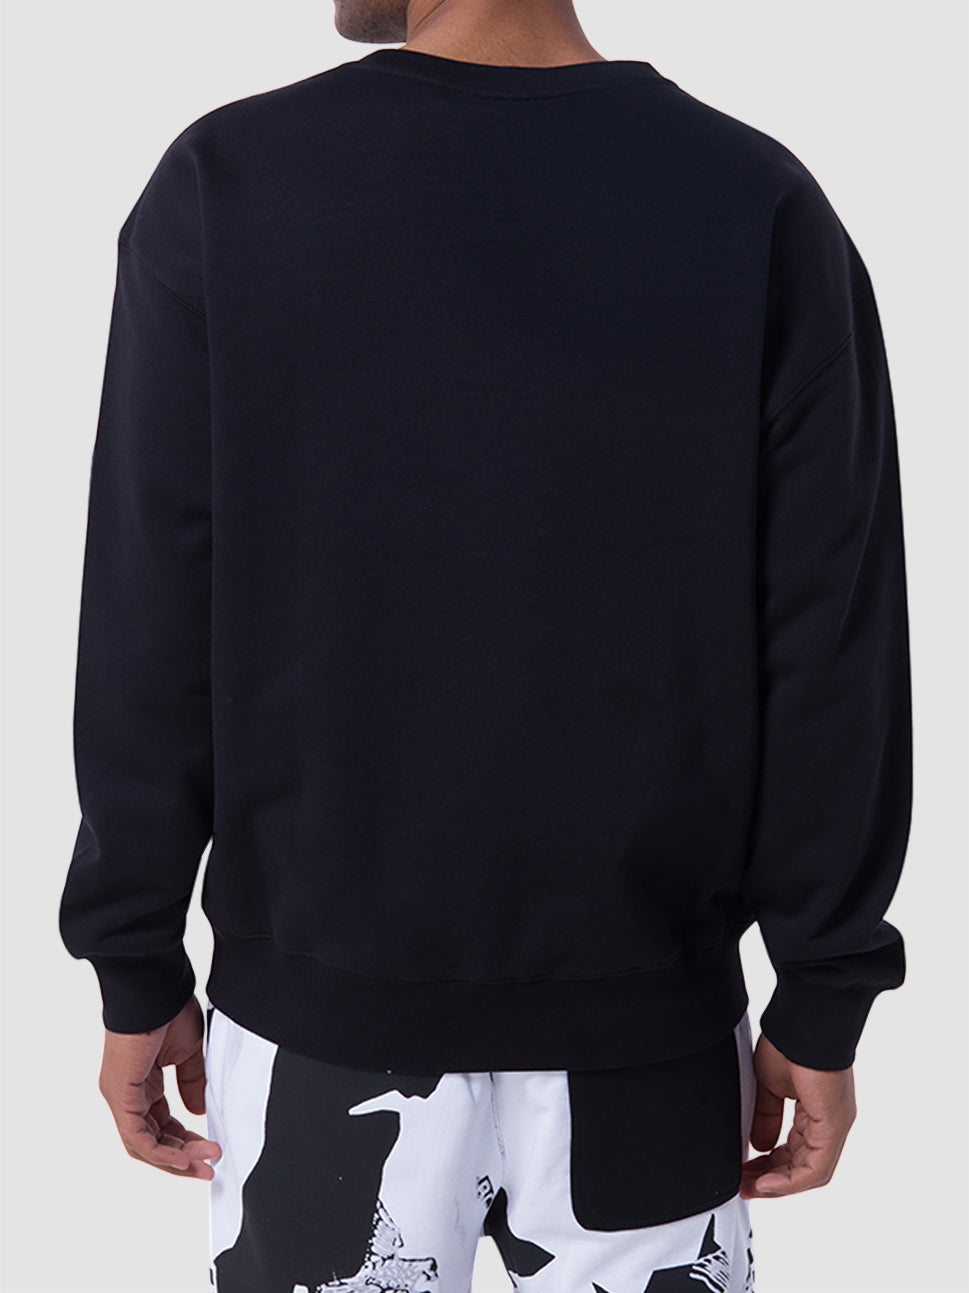 Boy London Sweatshirt BlackSilver 1015021